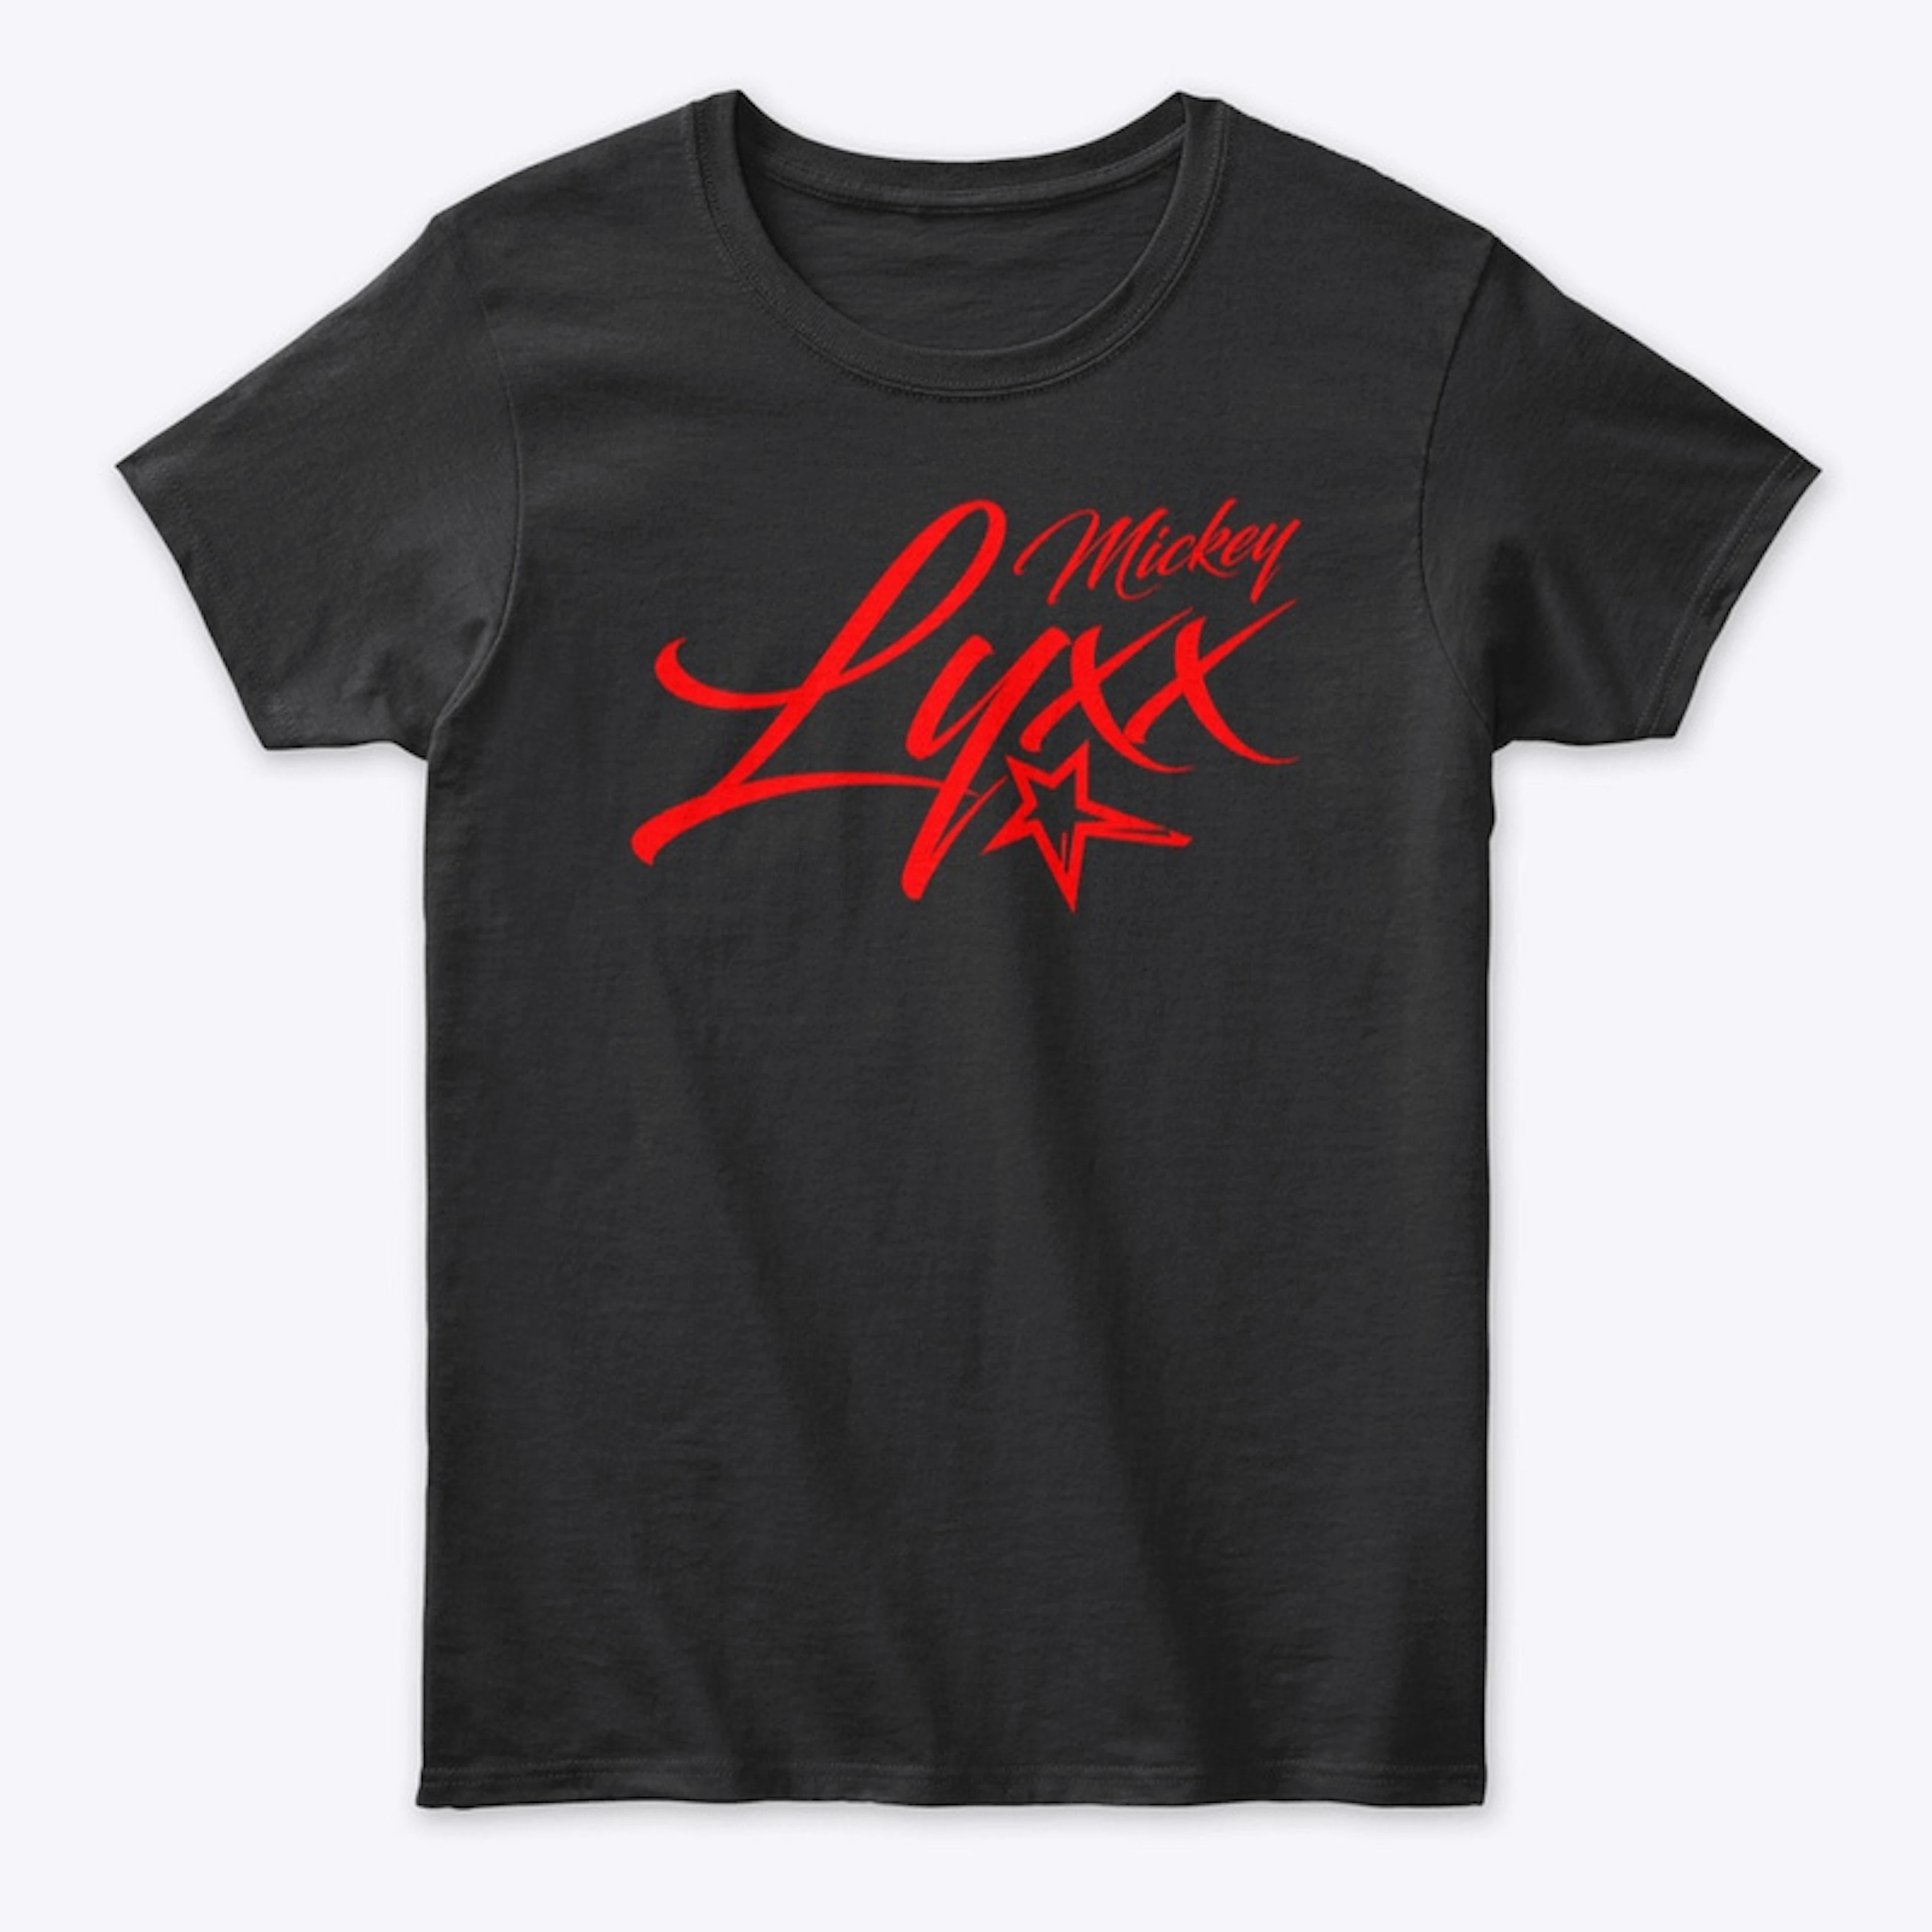 Womens Mickey Lyxx Shirt